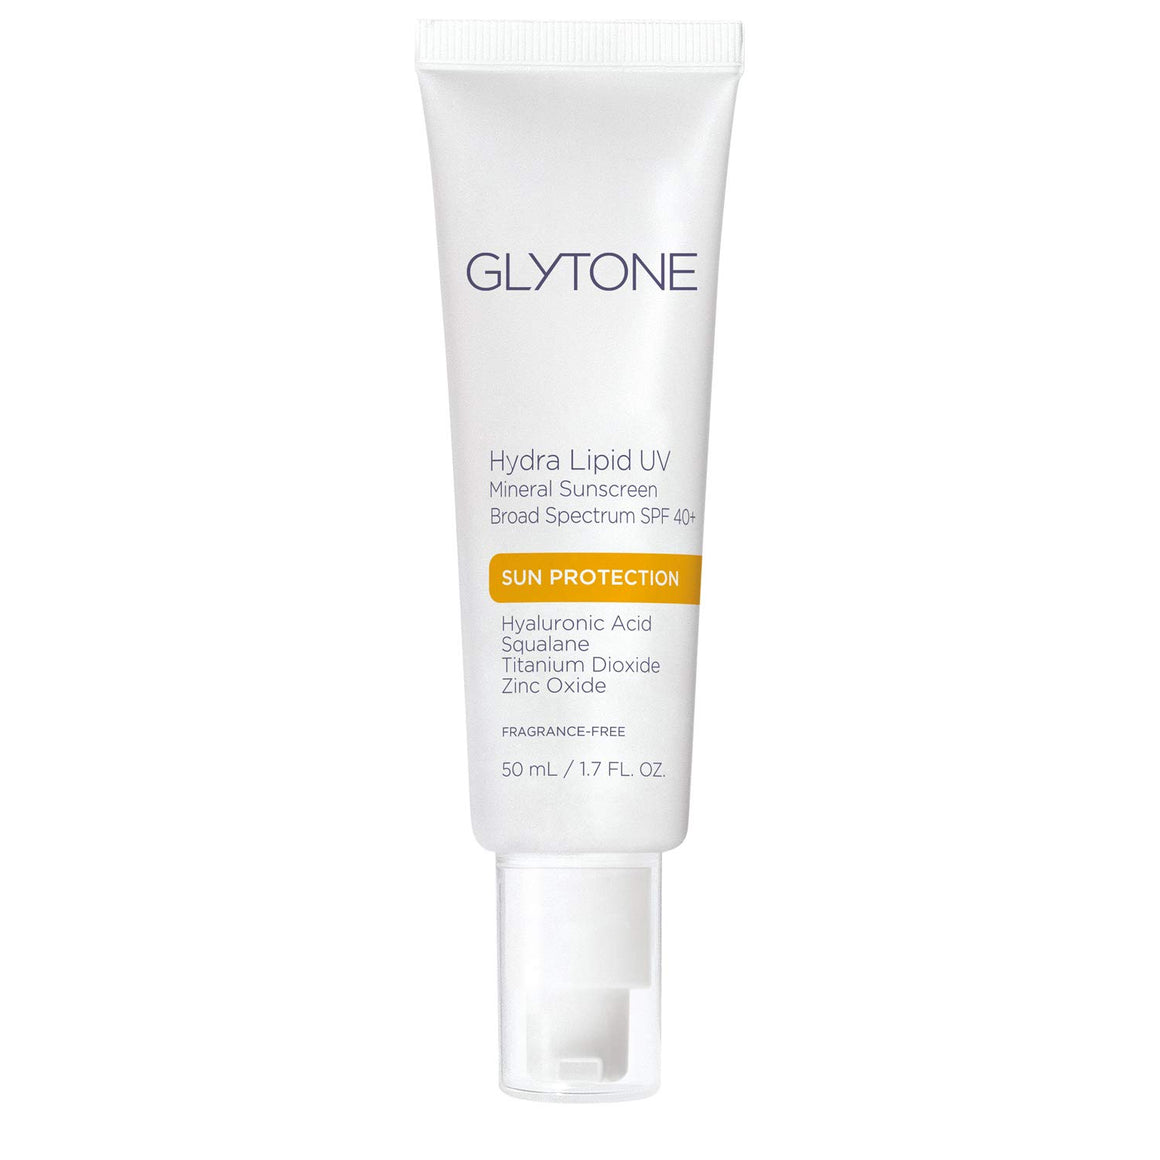 Glytone Hydra Lipid UV Mineral Sunscreen SPF40 1.7oz